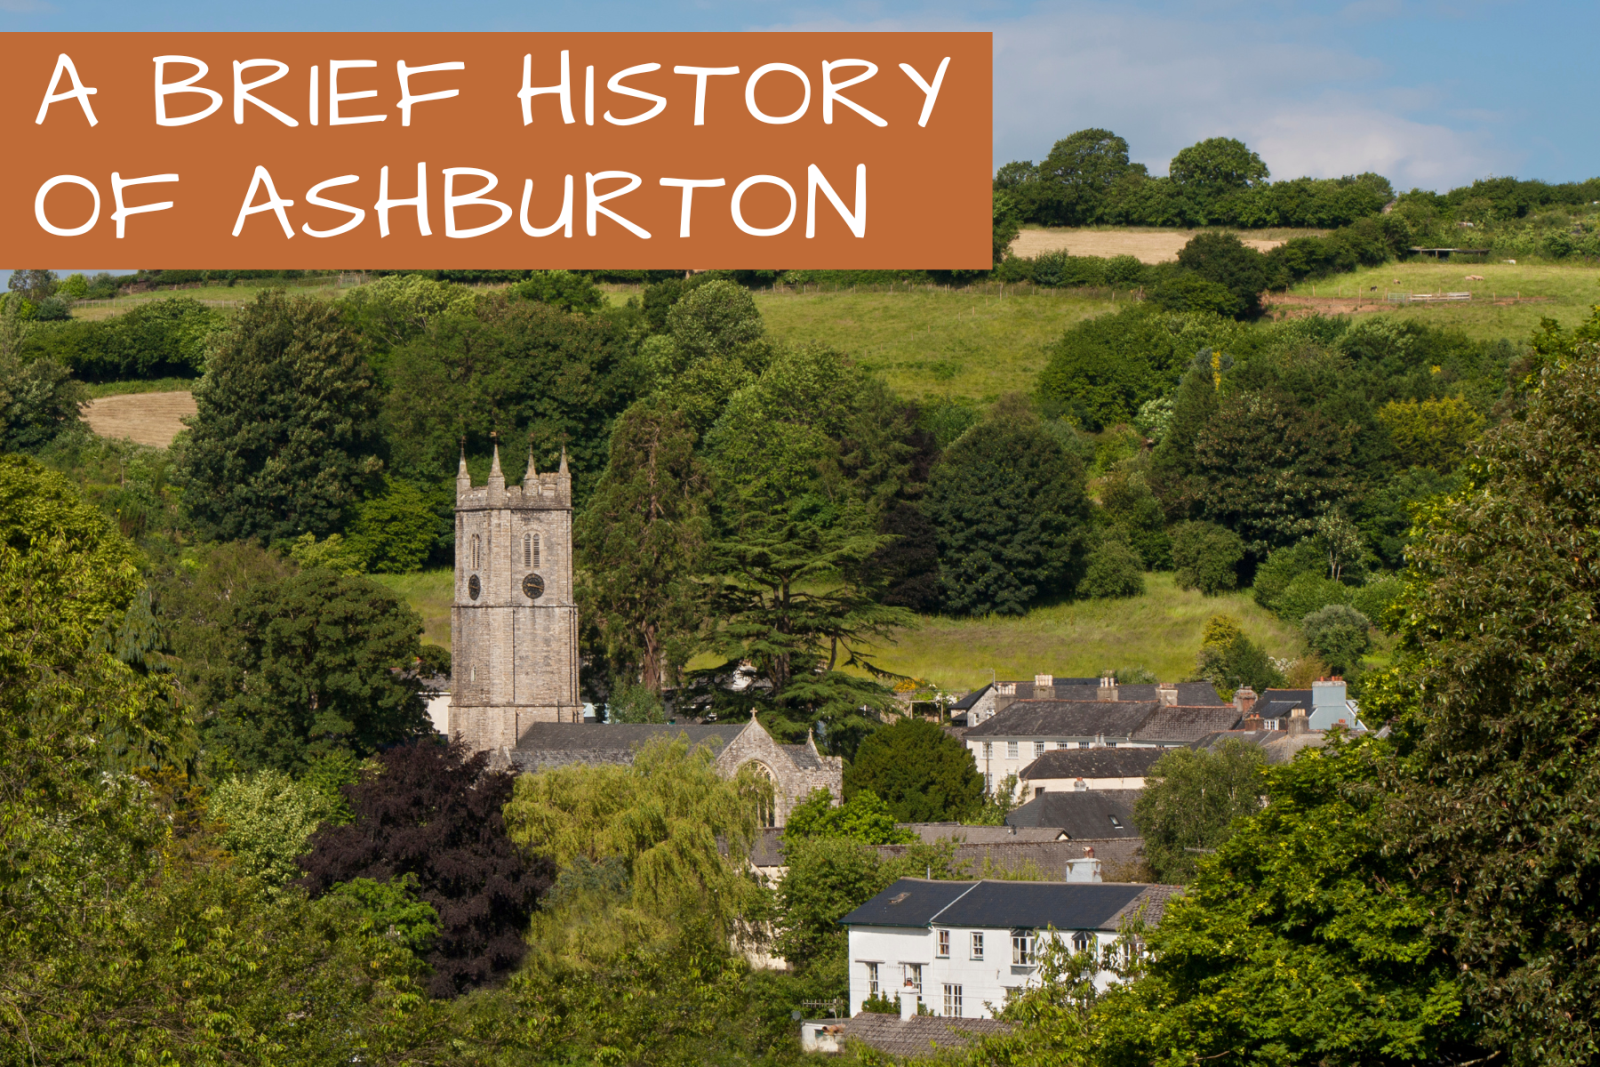 History of Ashburton